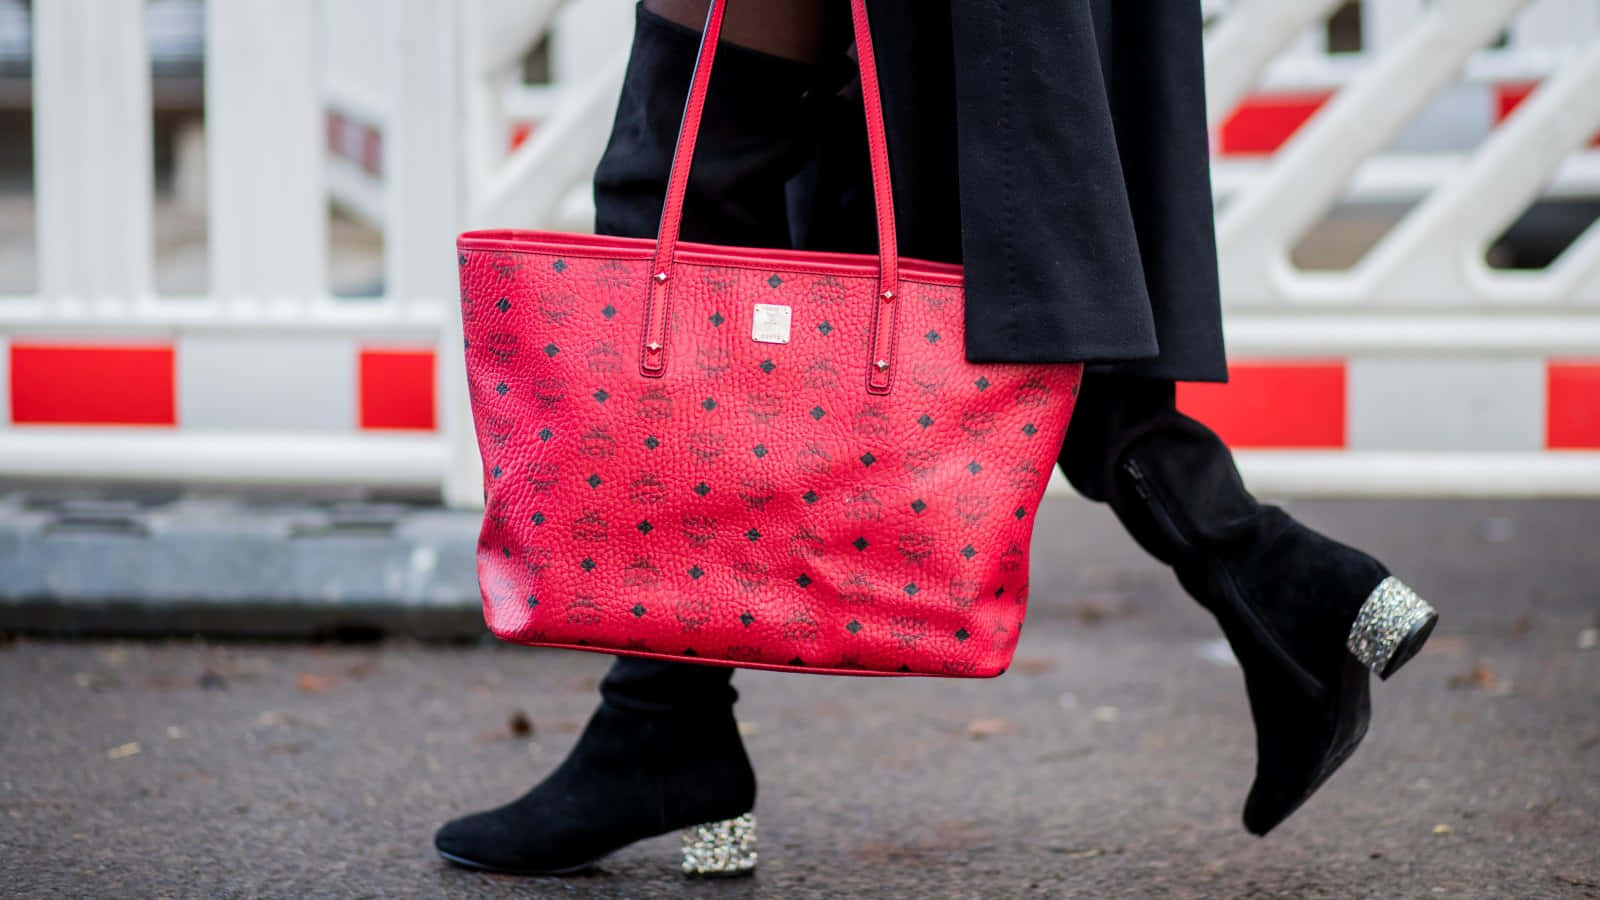 Caption: Stylish Red Handbag on a Wooden Surface Wallpaper